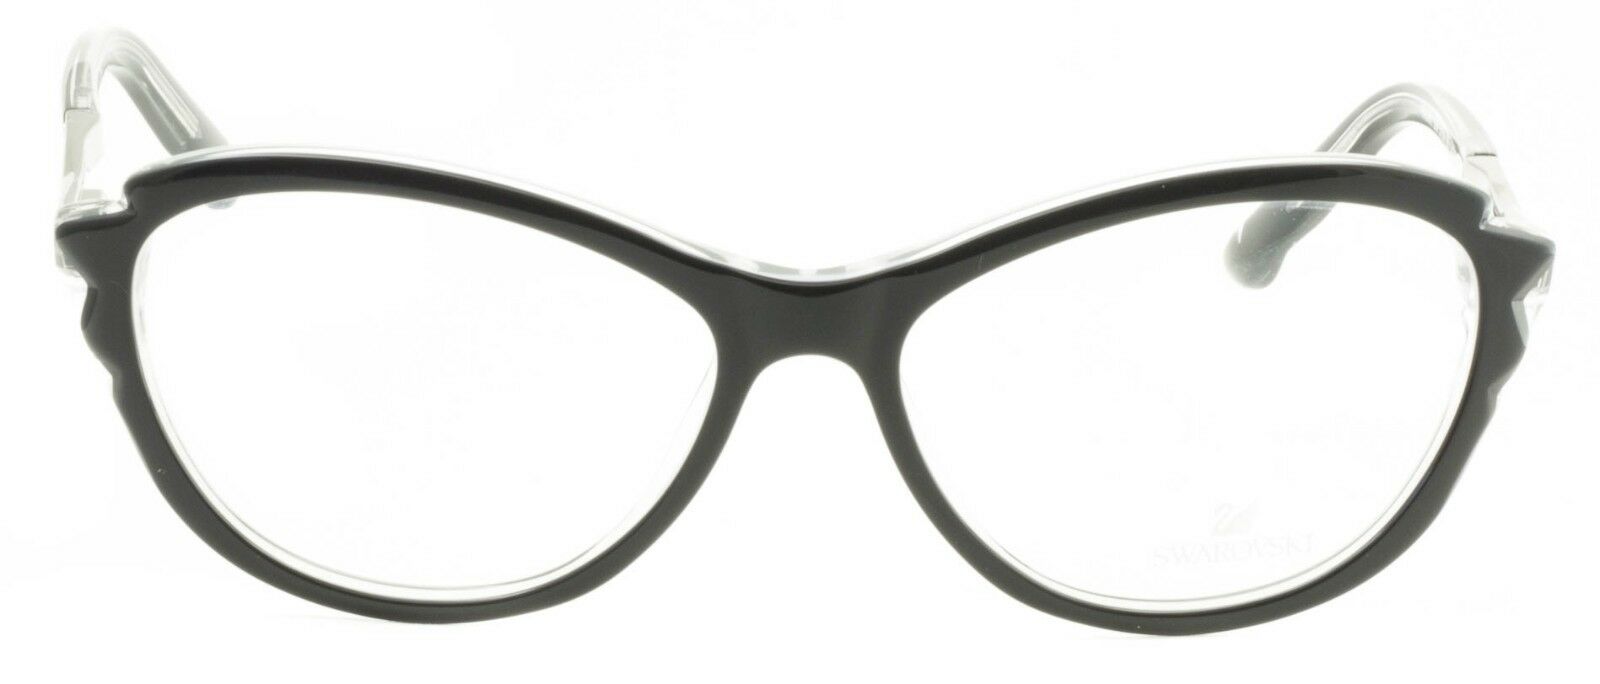 SWAROVSKI FANNY SW 5156 005 Eyewear FRAMES RX Optical Glasses Eyeglasses - BNIB